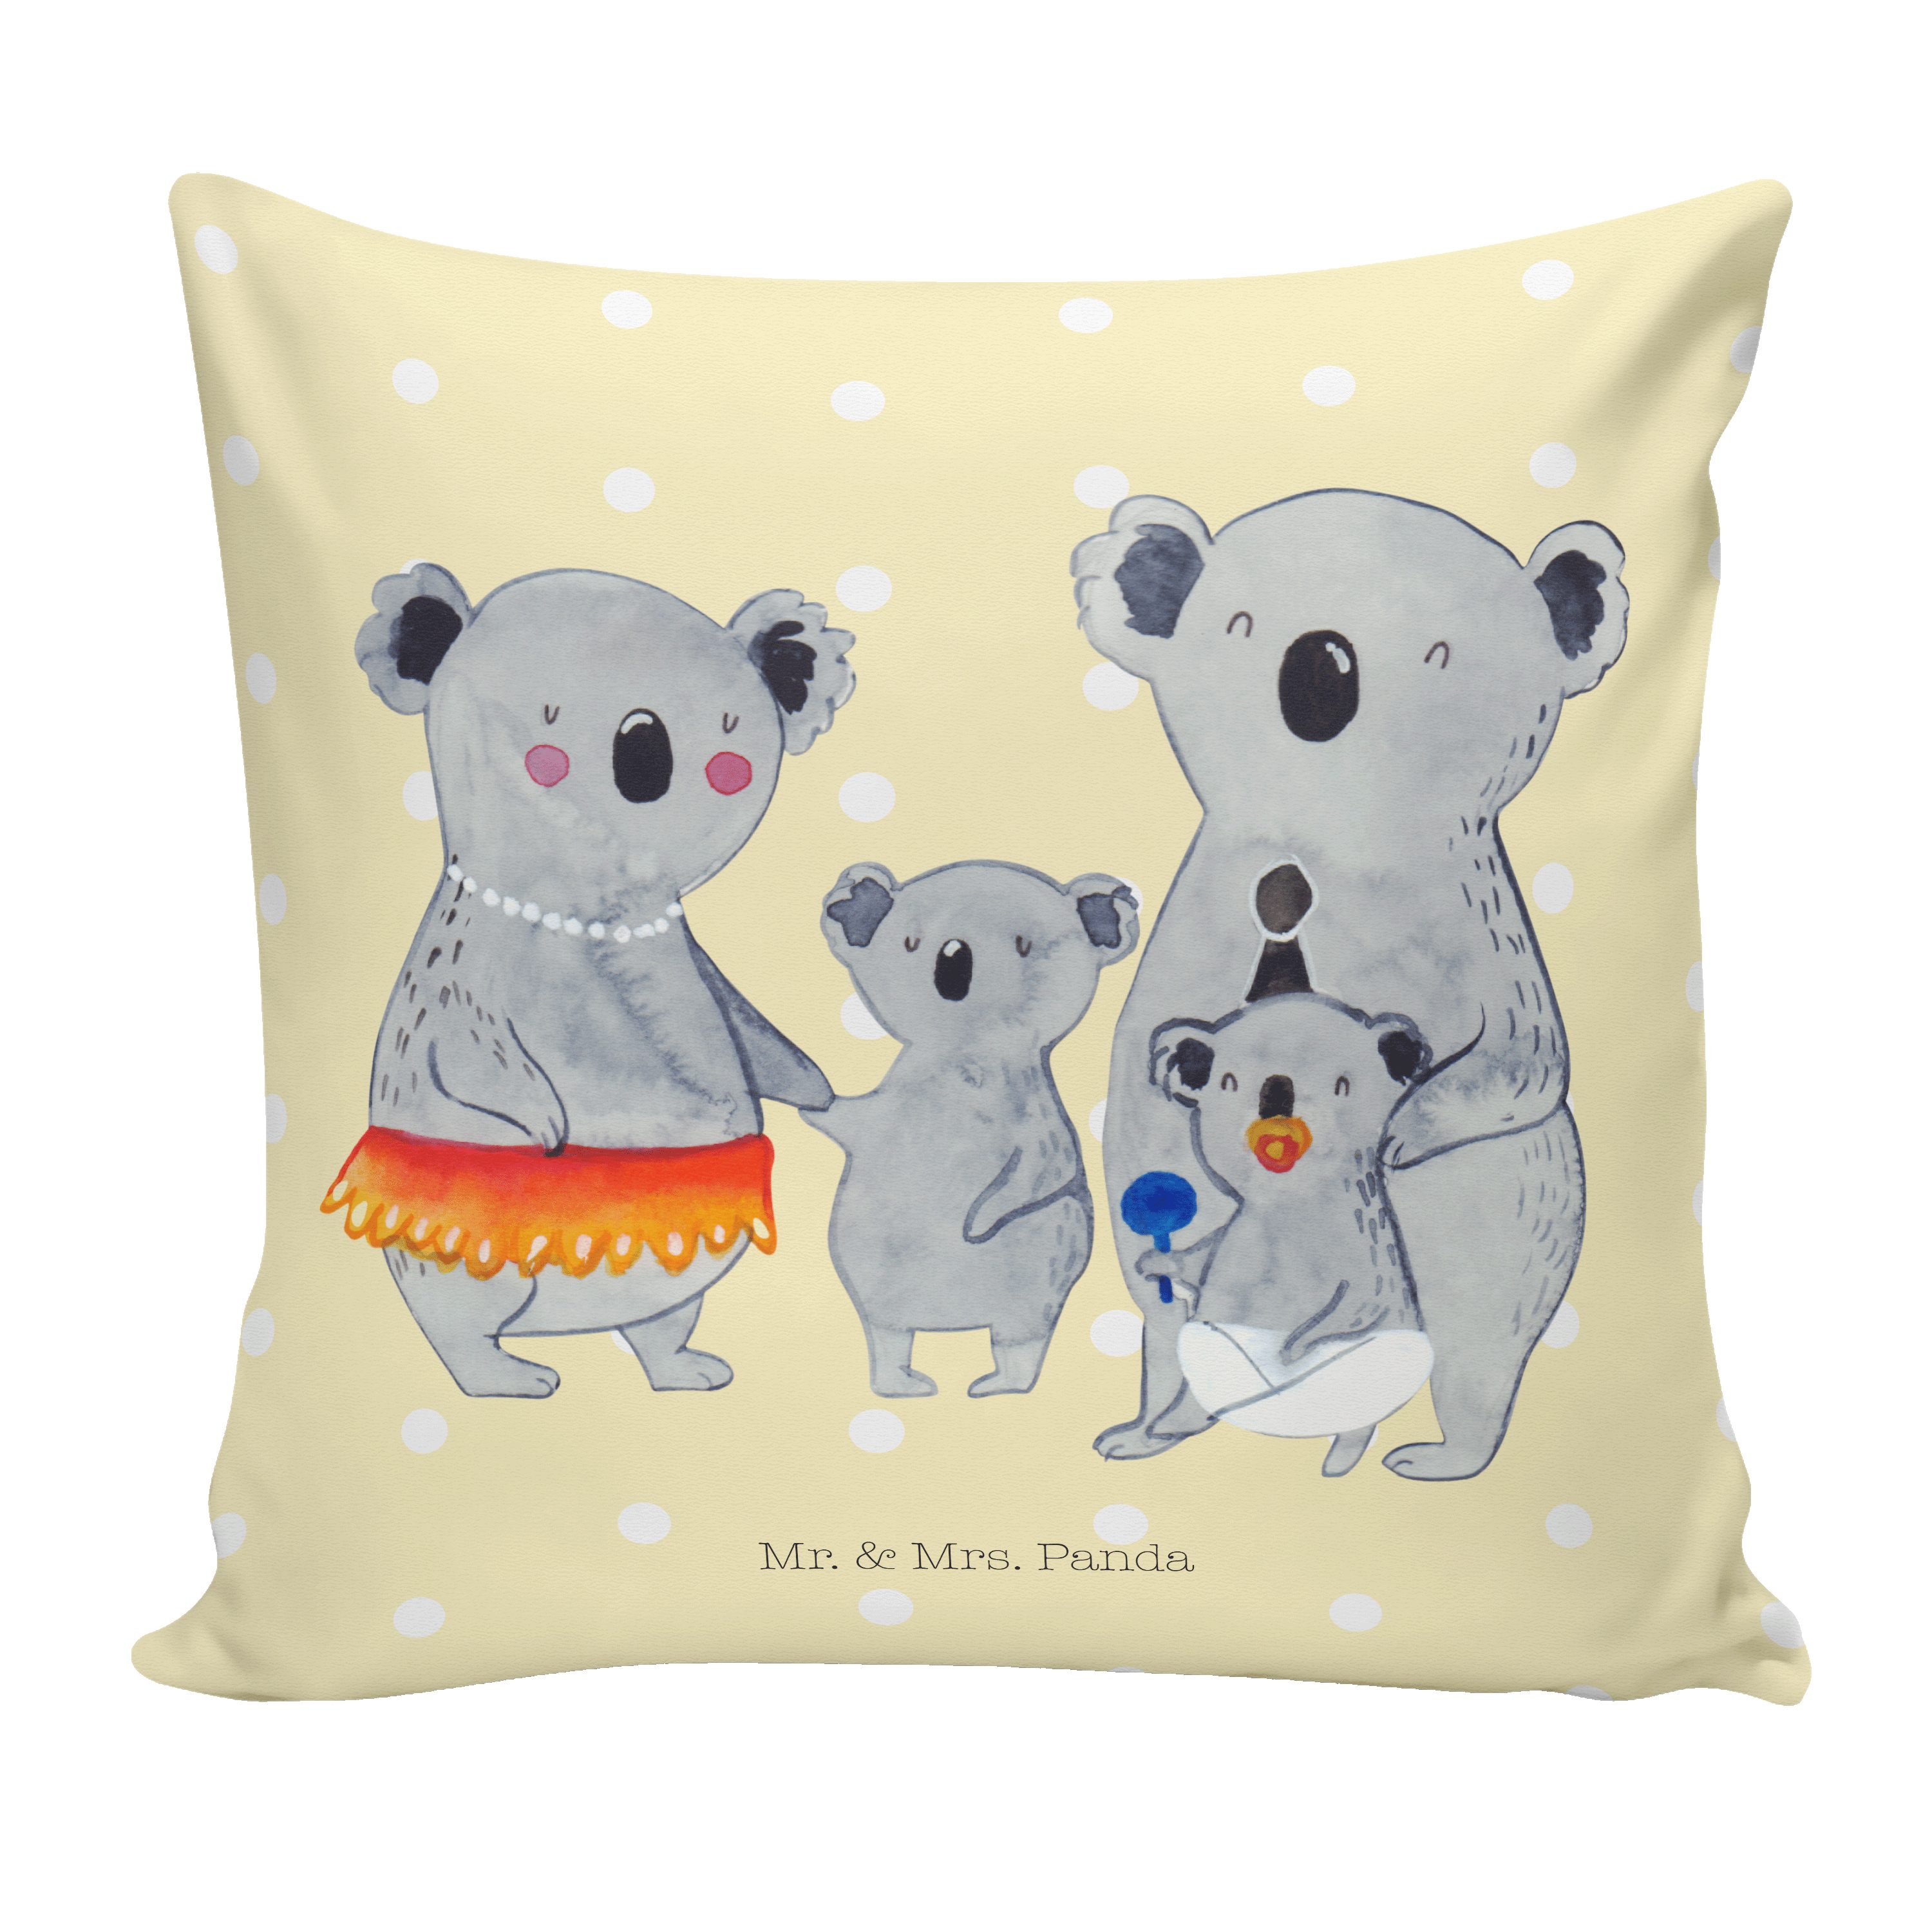 Mr. & Mrs. Panda Dekokissen Koala Familie - Gelb Pastell - Geschenk, Sofakissen, Bruder, Mutterta